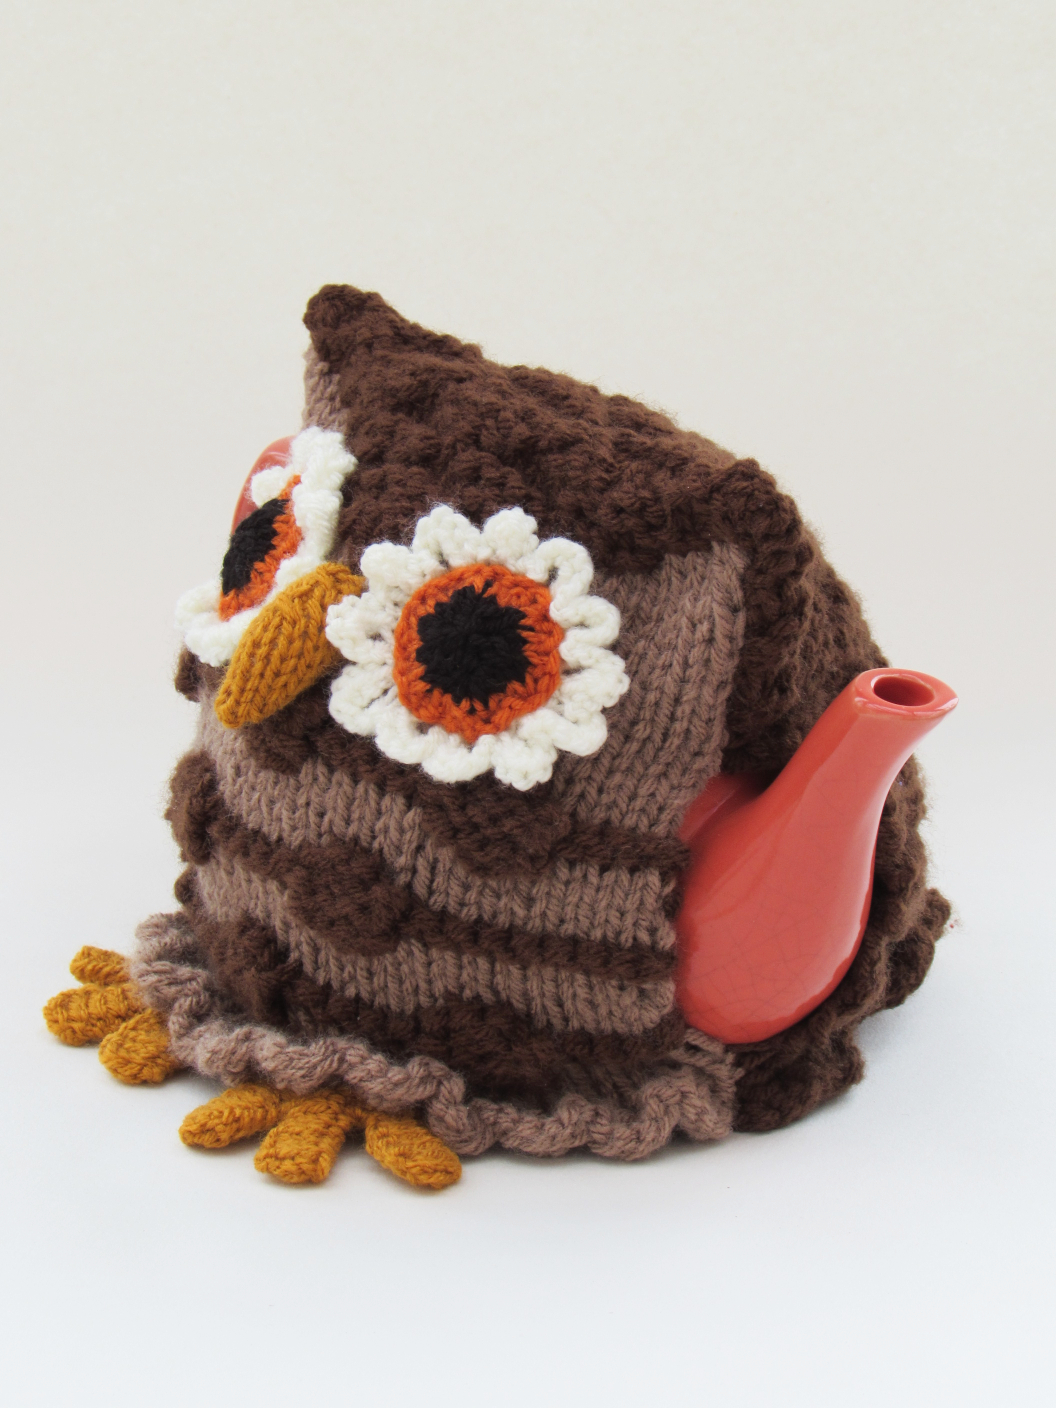 Twit-Twoo Owl knitting pattern